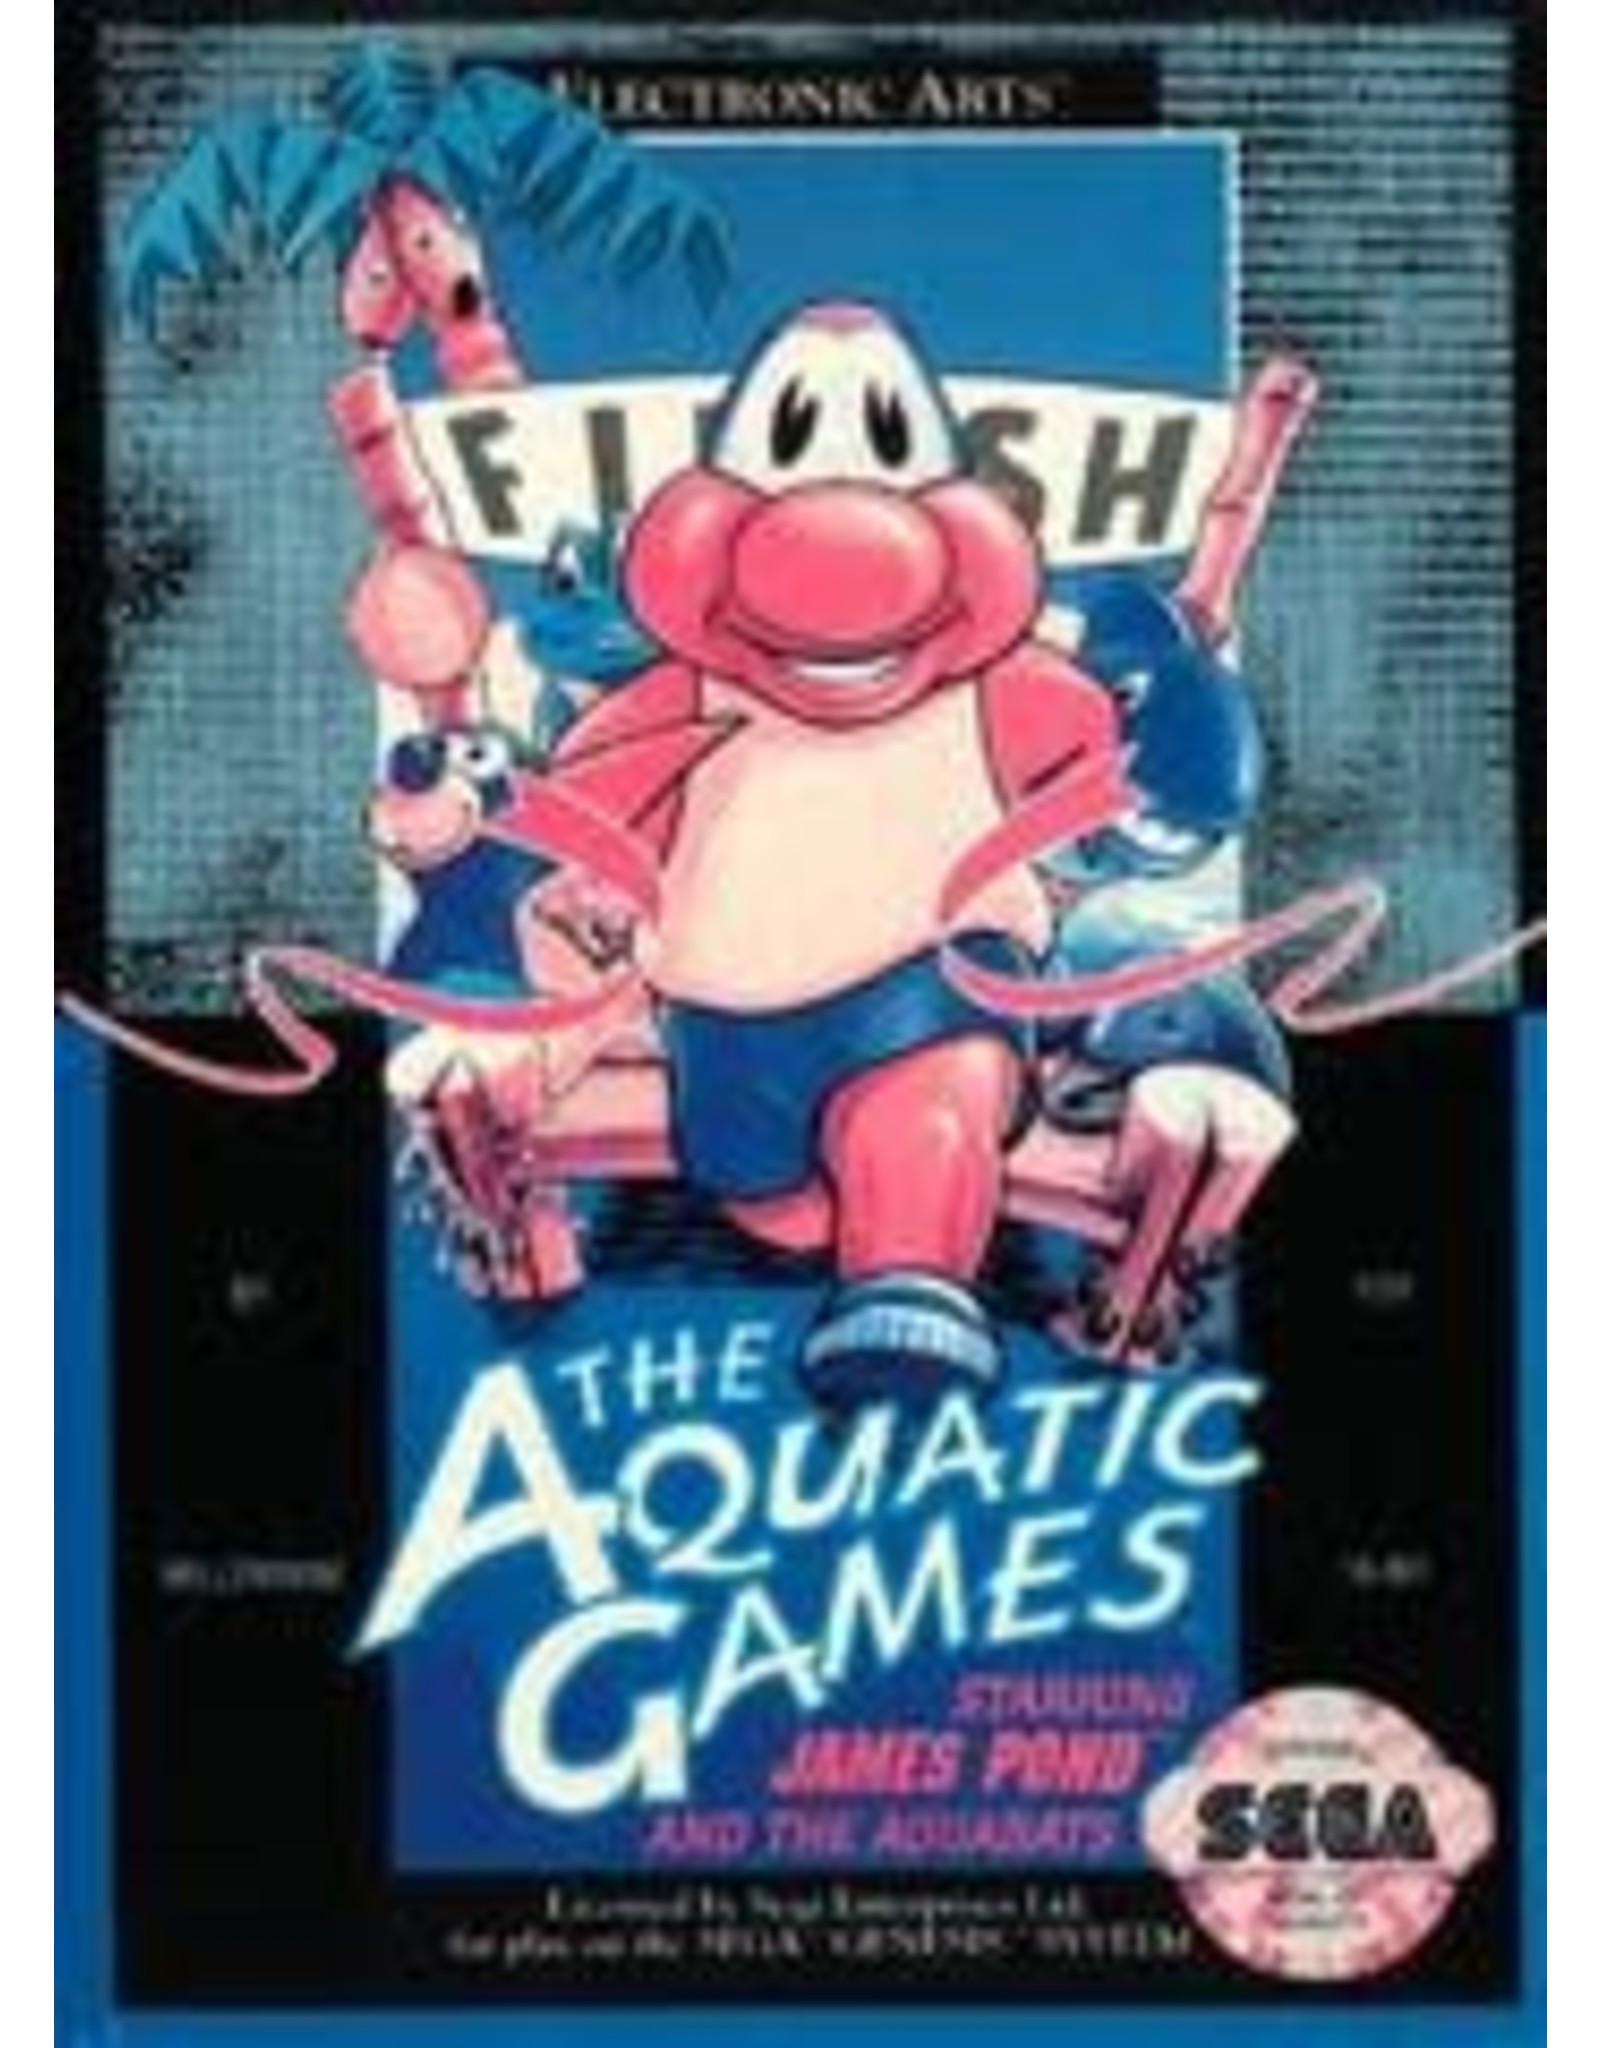 Sega Genesis Aquatic Games Starring James Pond (Boxed, No Manual)